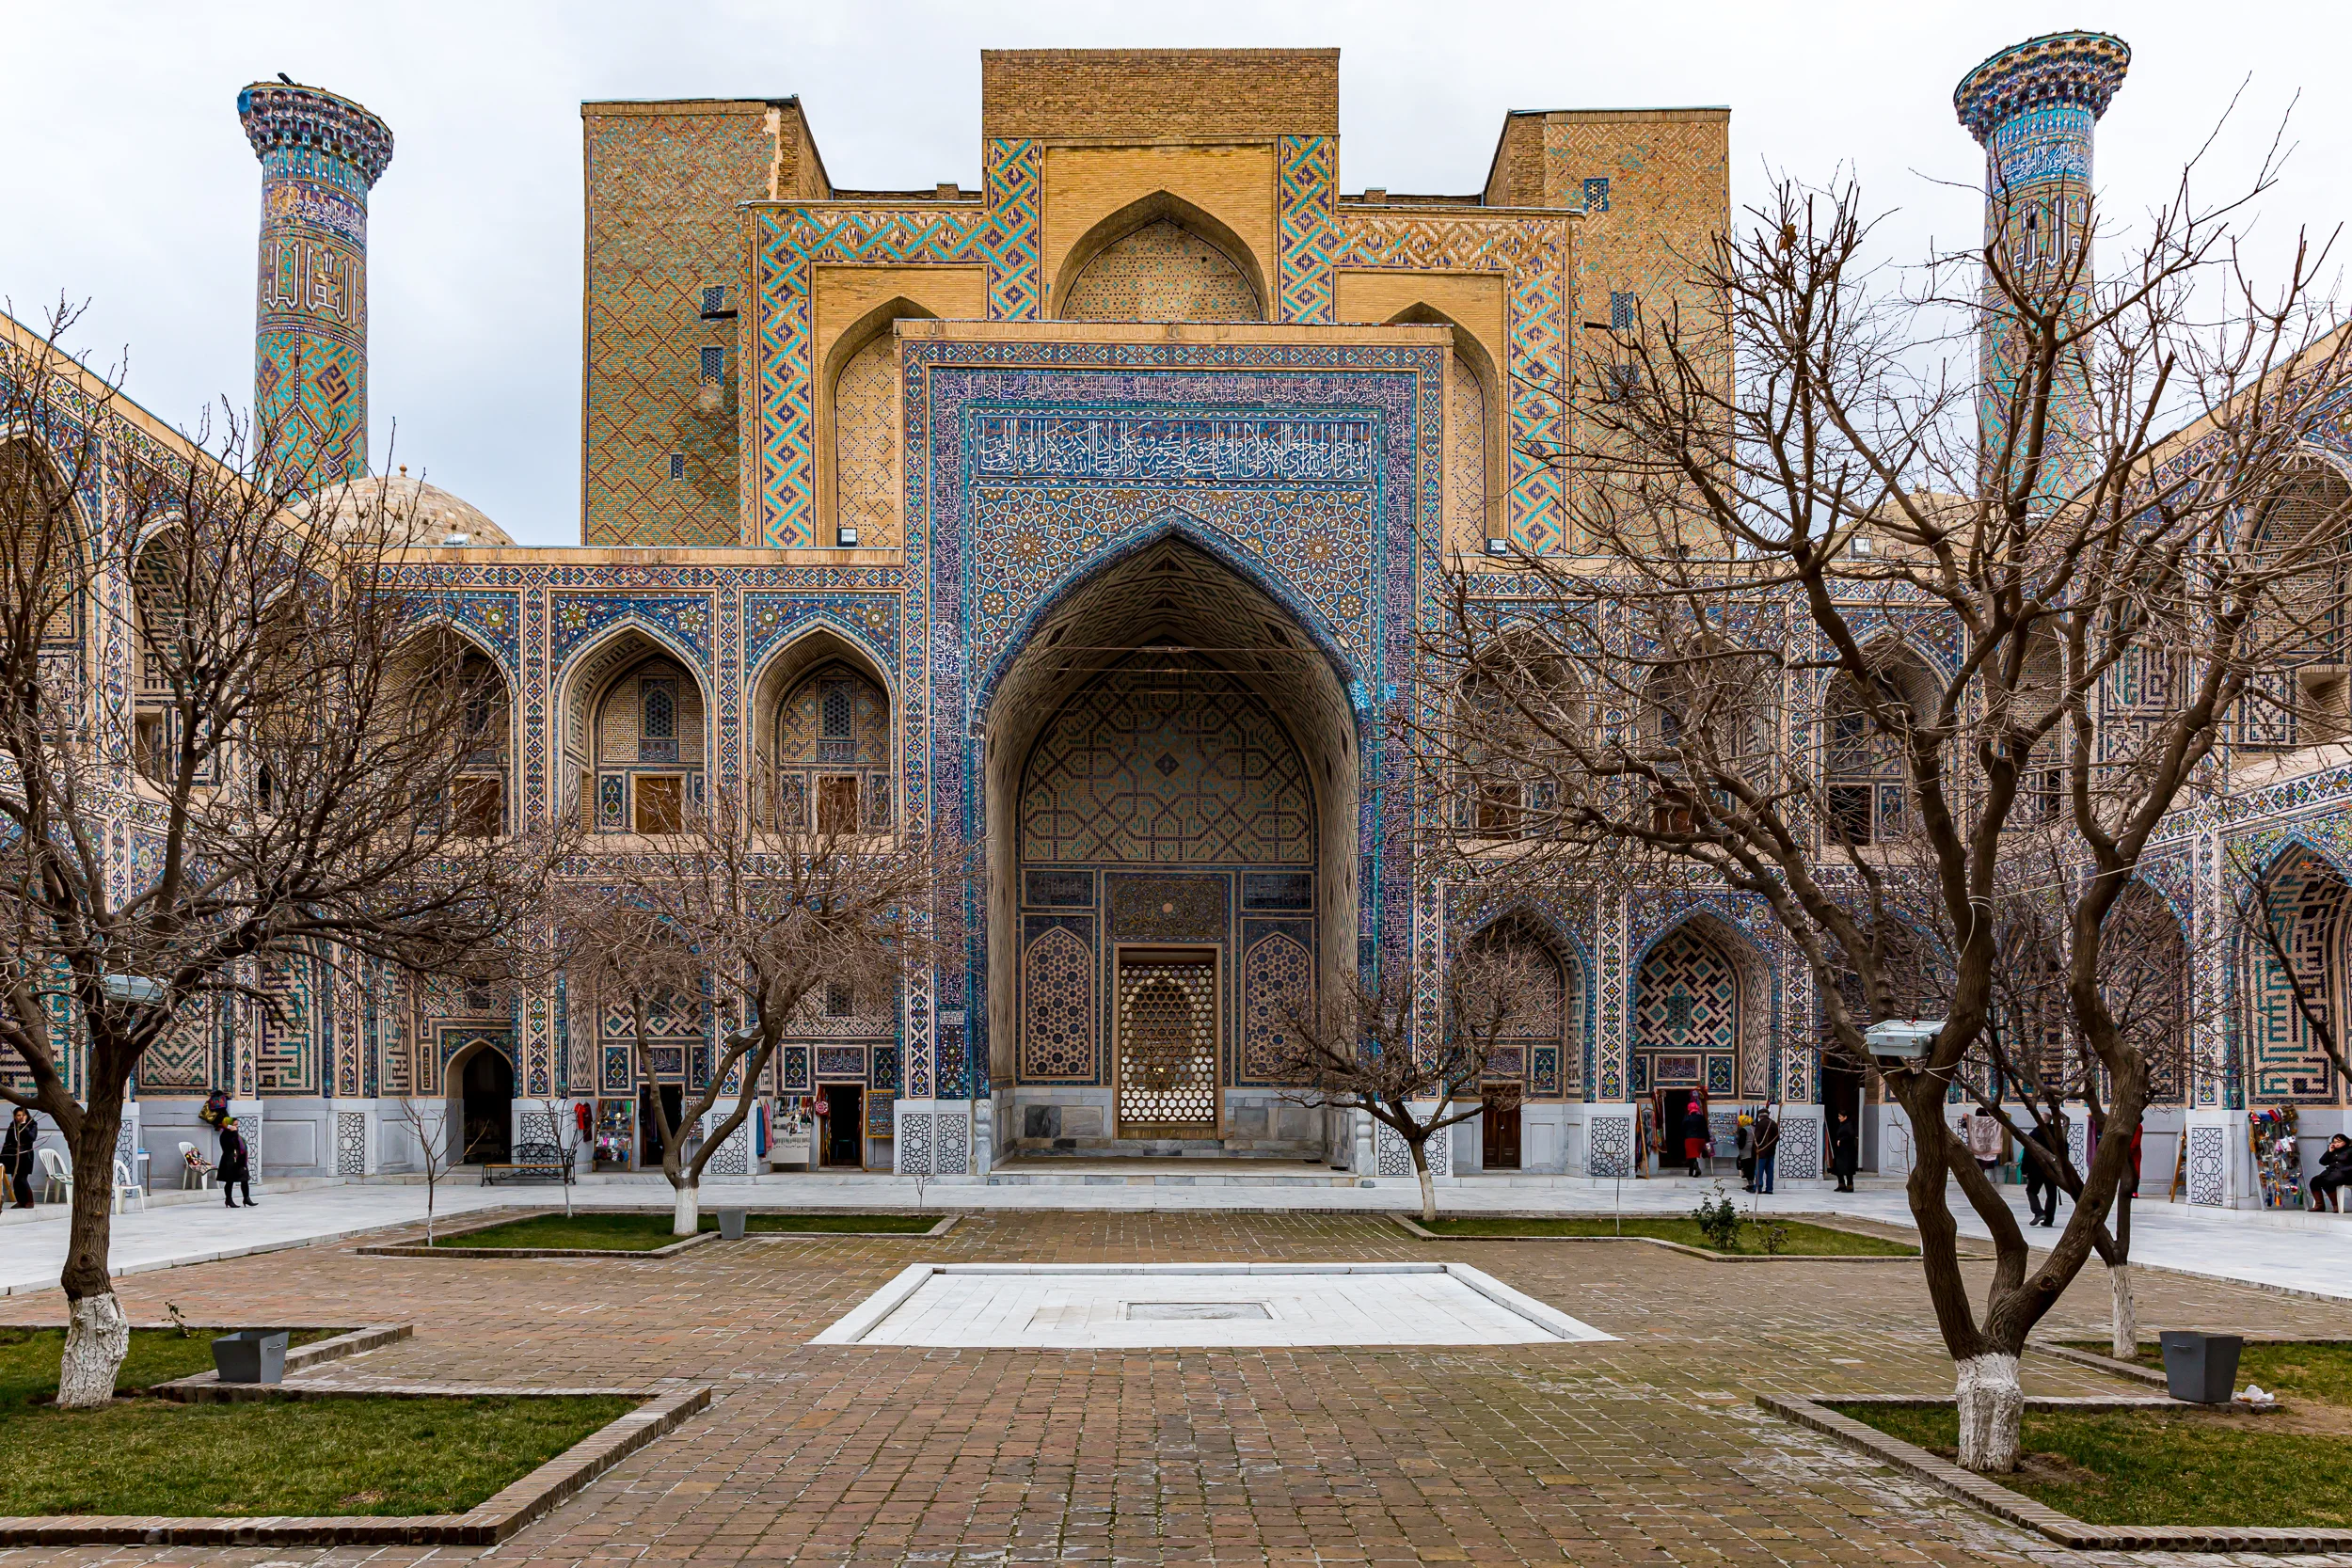 Bukhara Ark. Winter